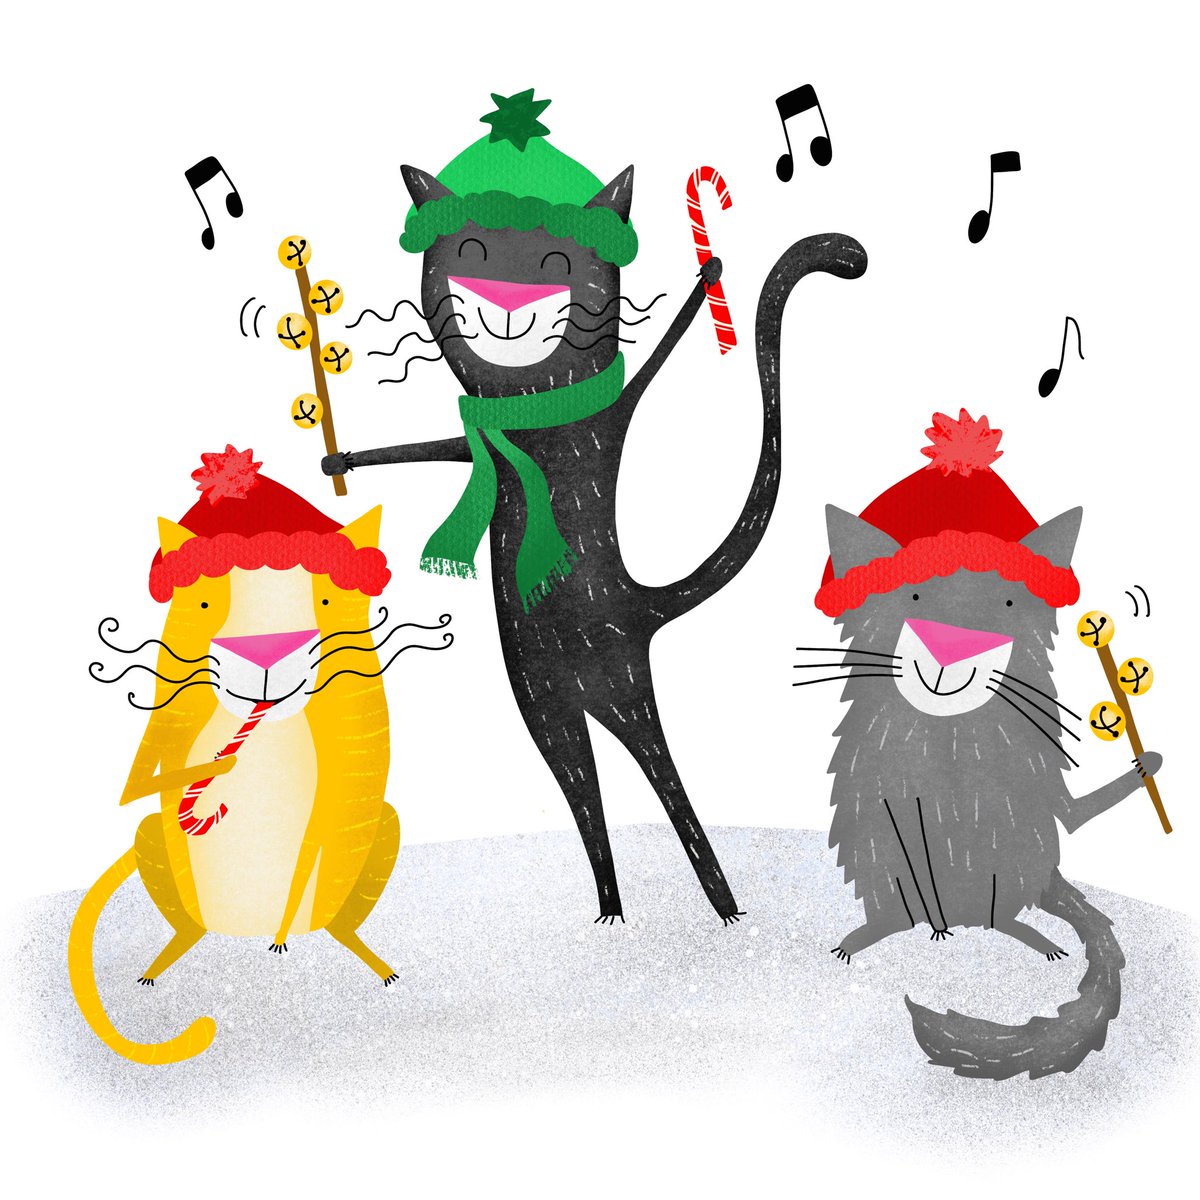 Jingle cats #kidlit #kidlitart #illustration #picturebookart #picturebooks #childrensbookart #scbwiillustrator